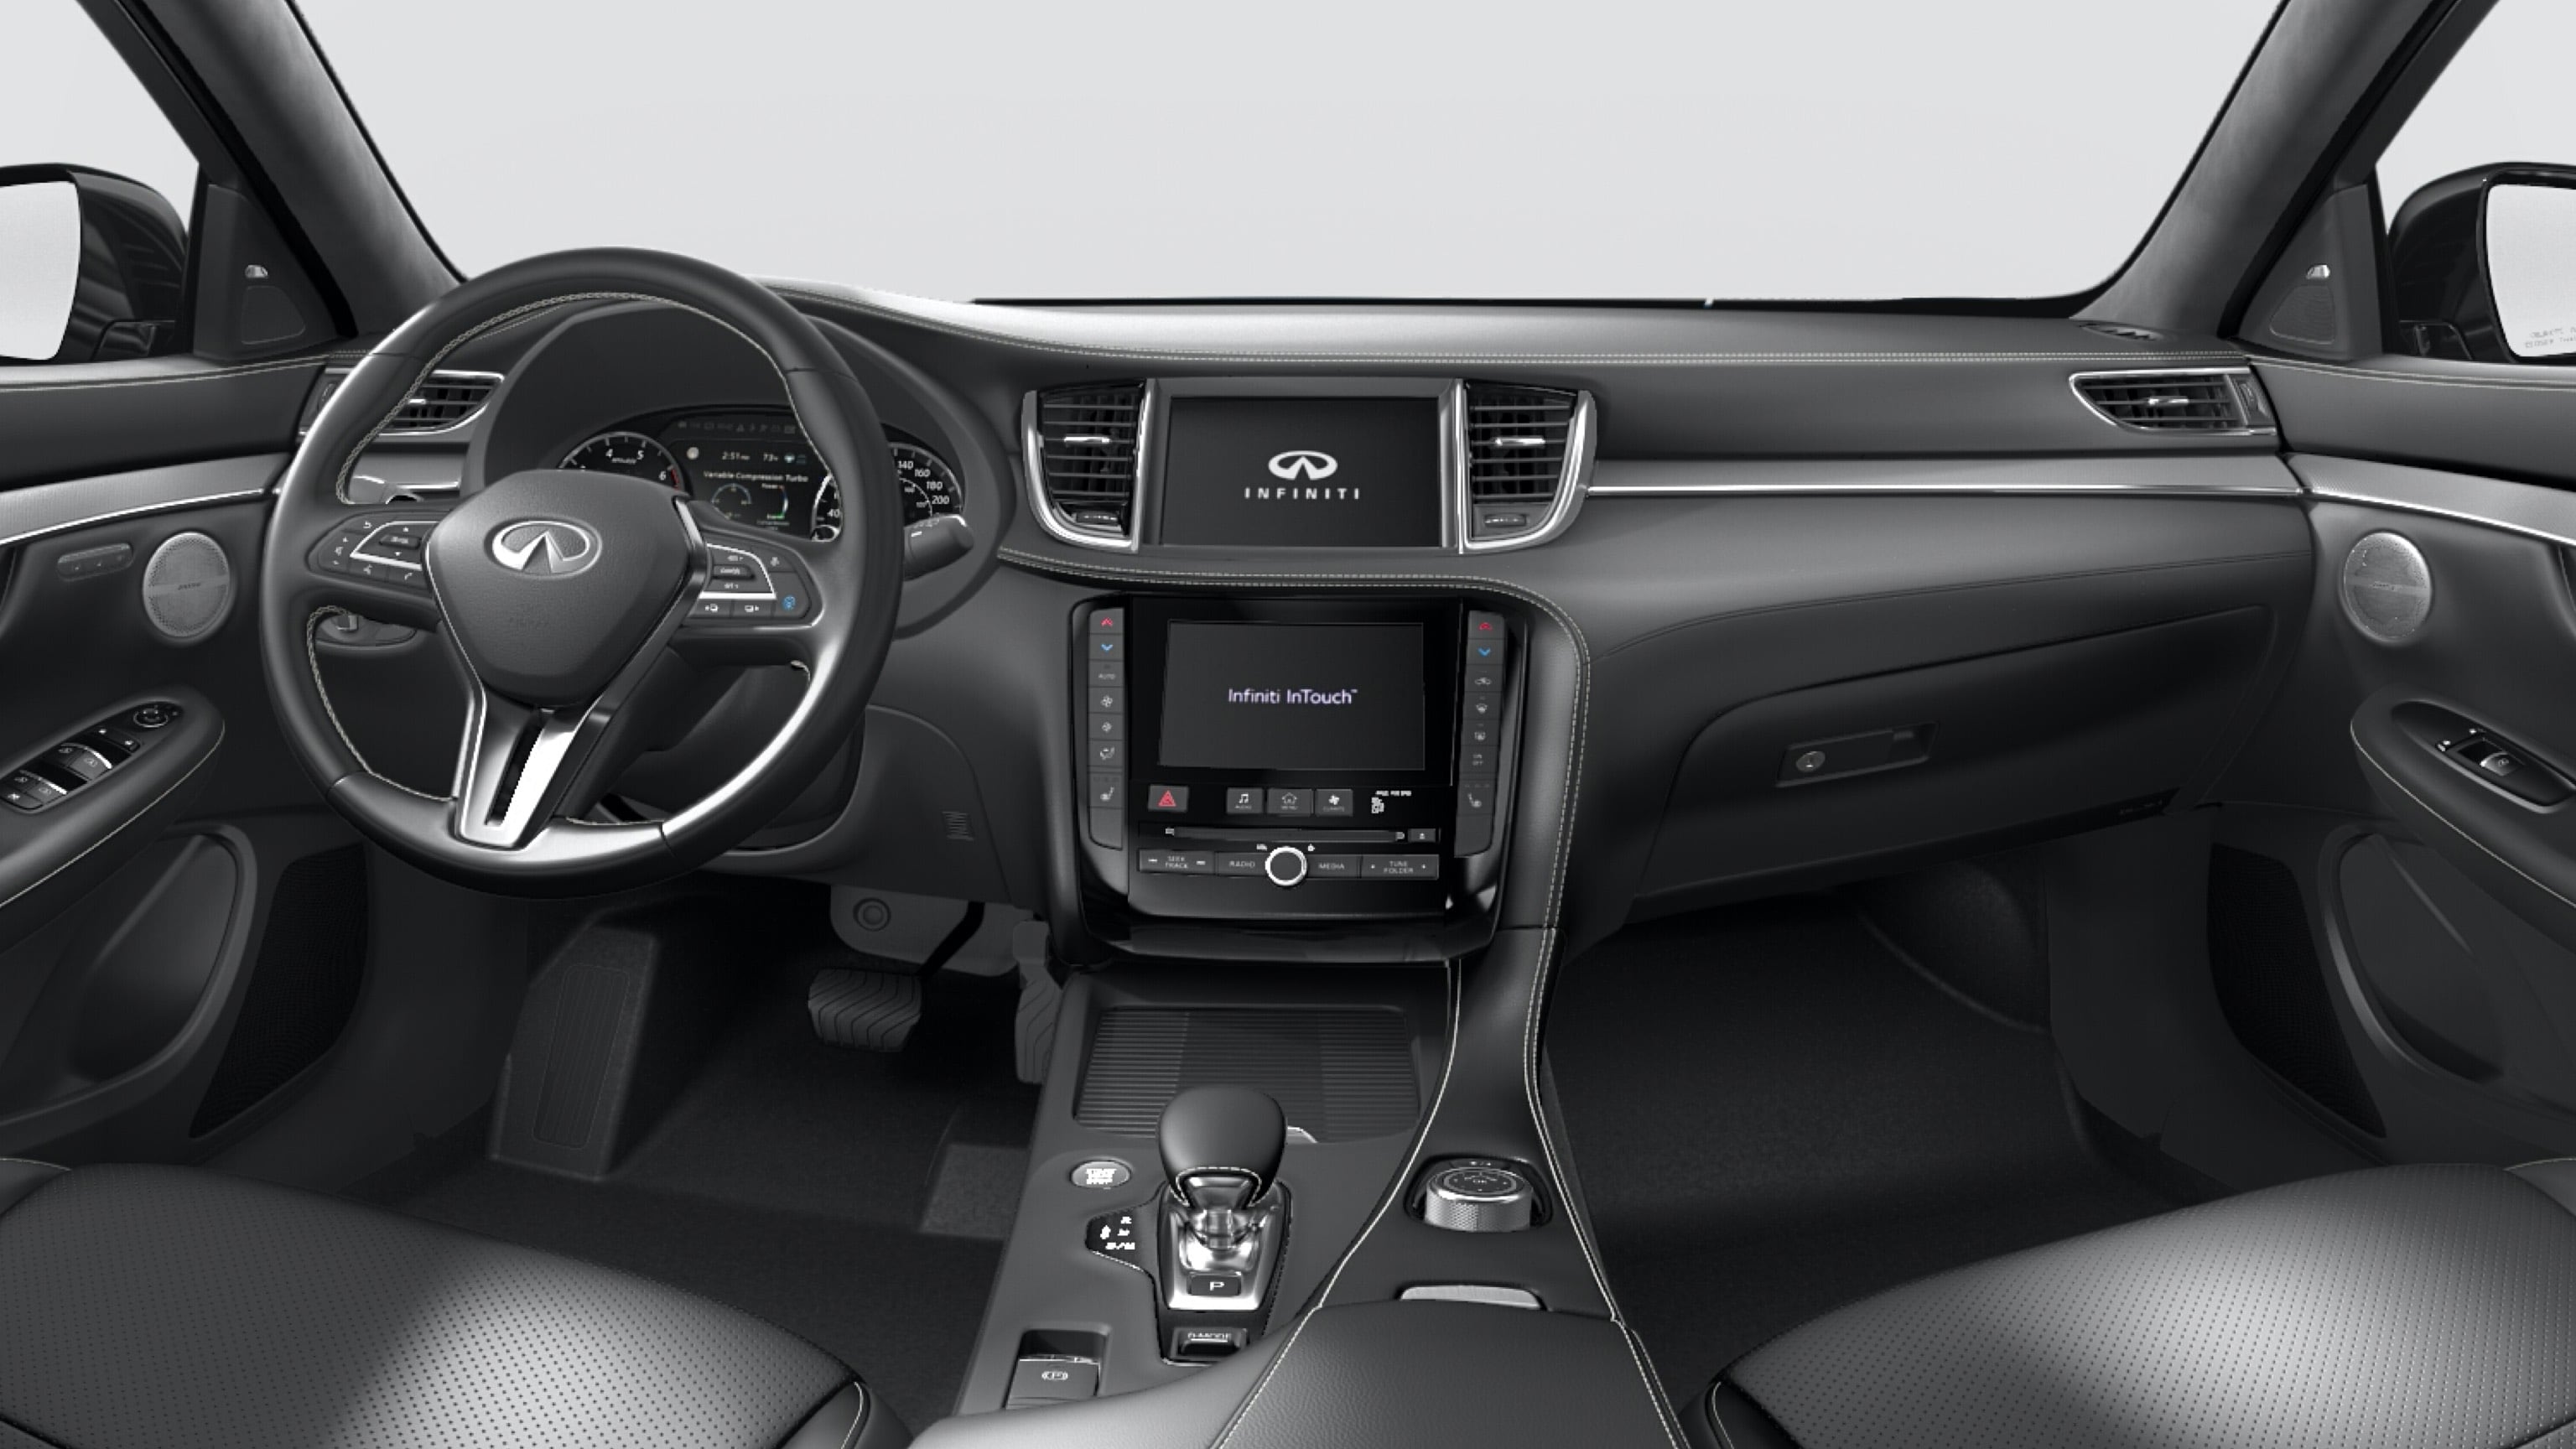 2022 INFINITI QX50 Interior with graphite leatherette seats and painted Aluminum Interior Trim Accents